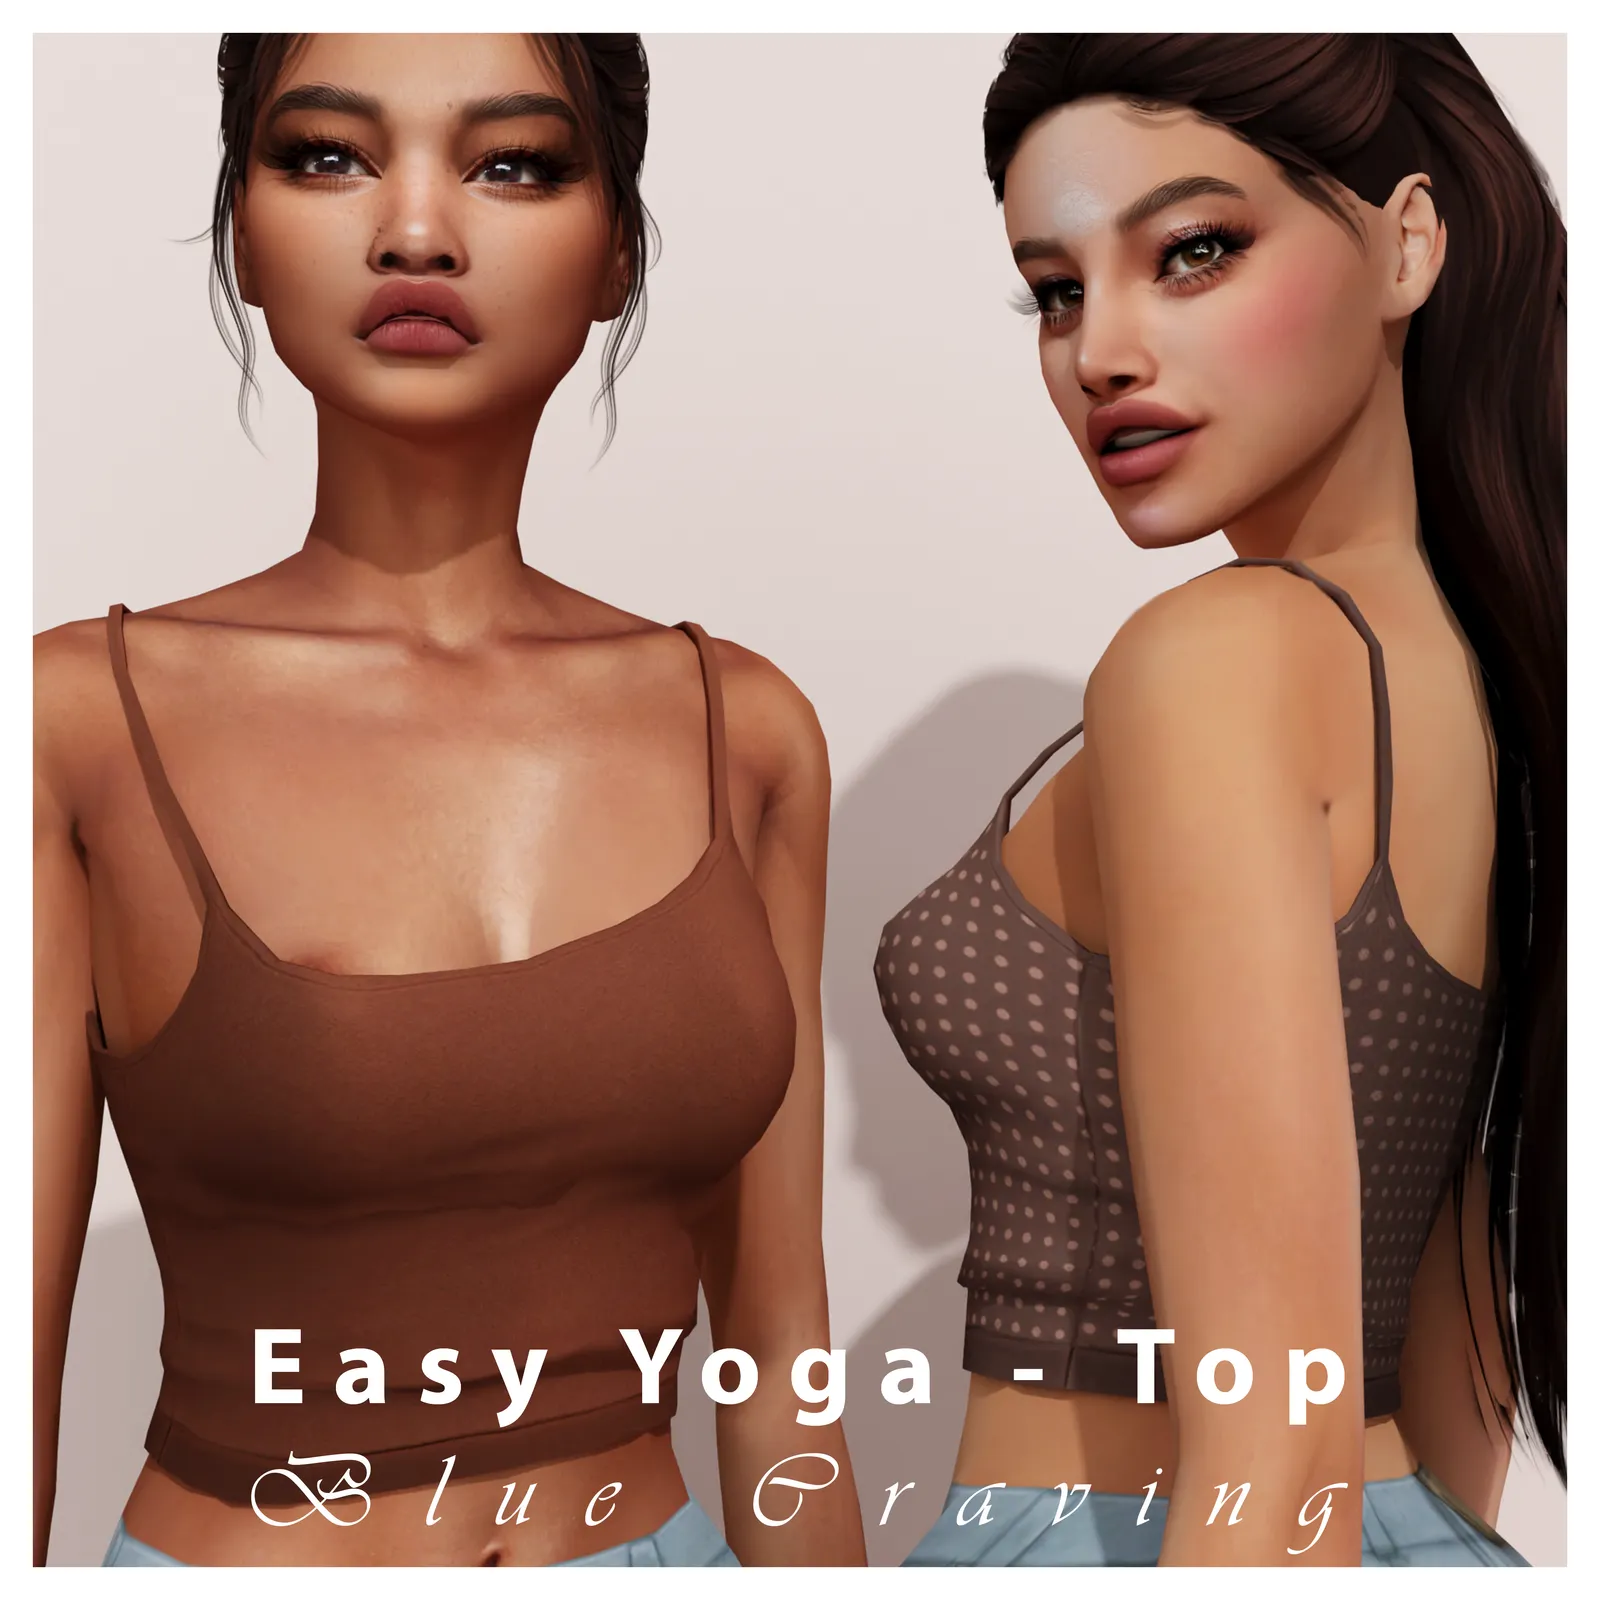 Easy Yoga - Top